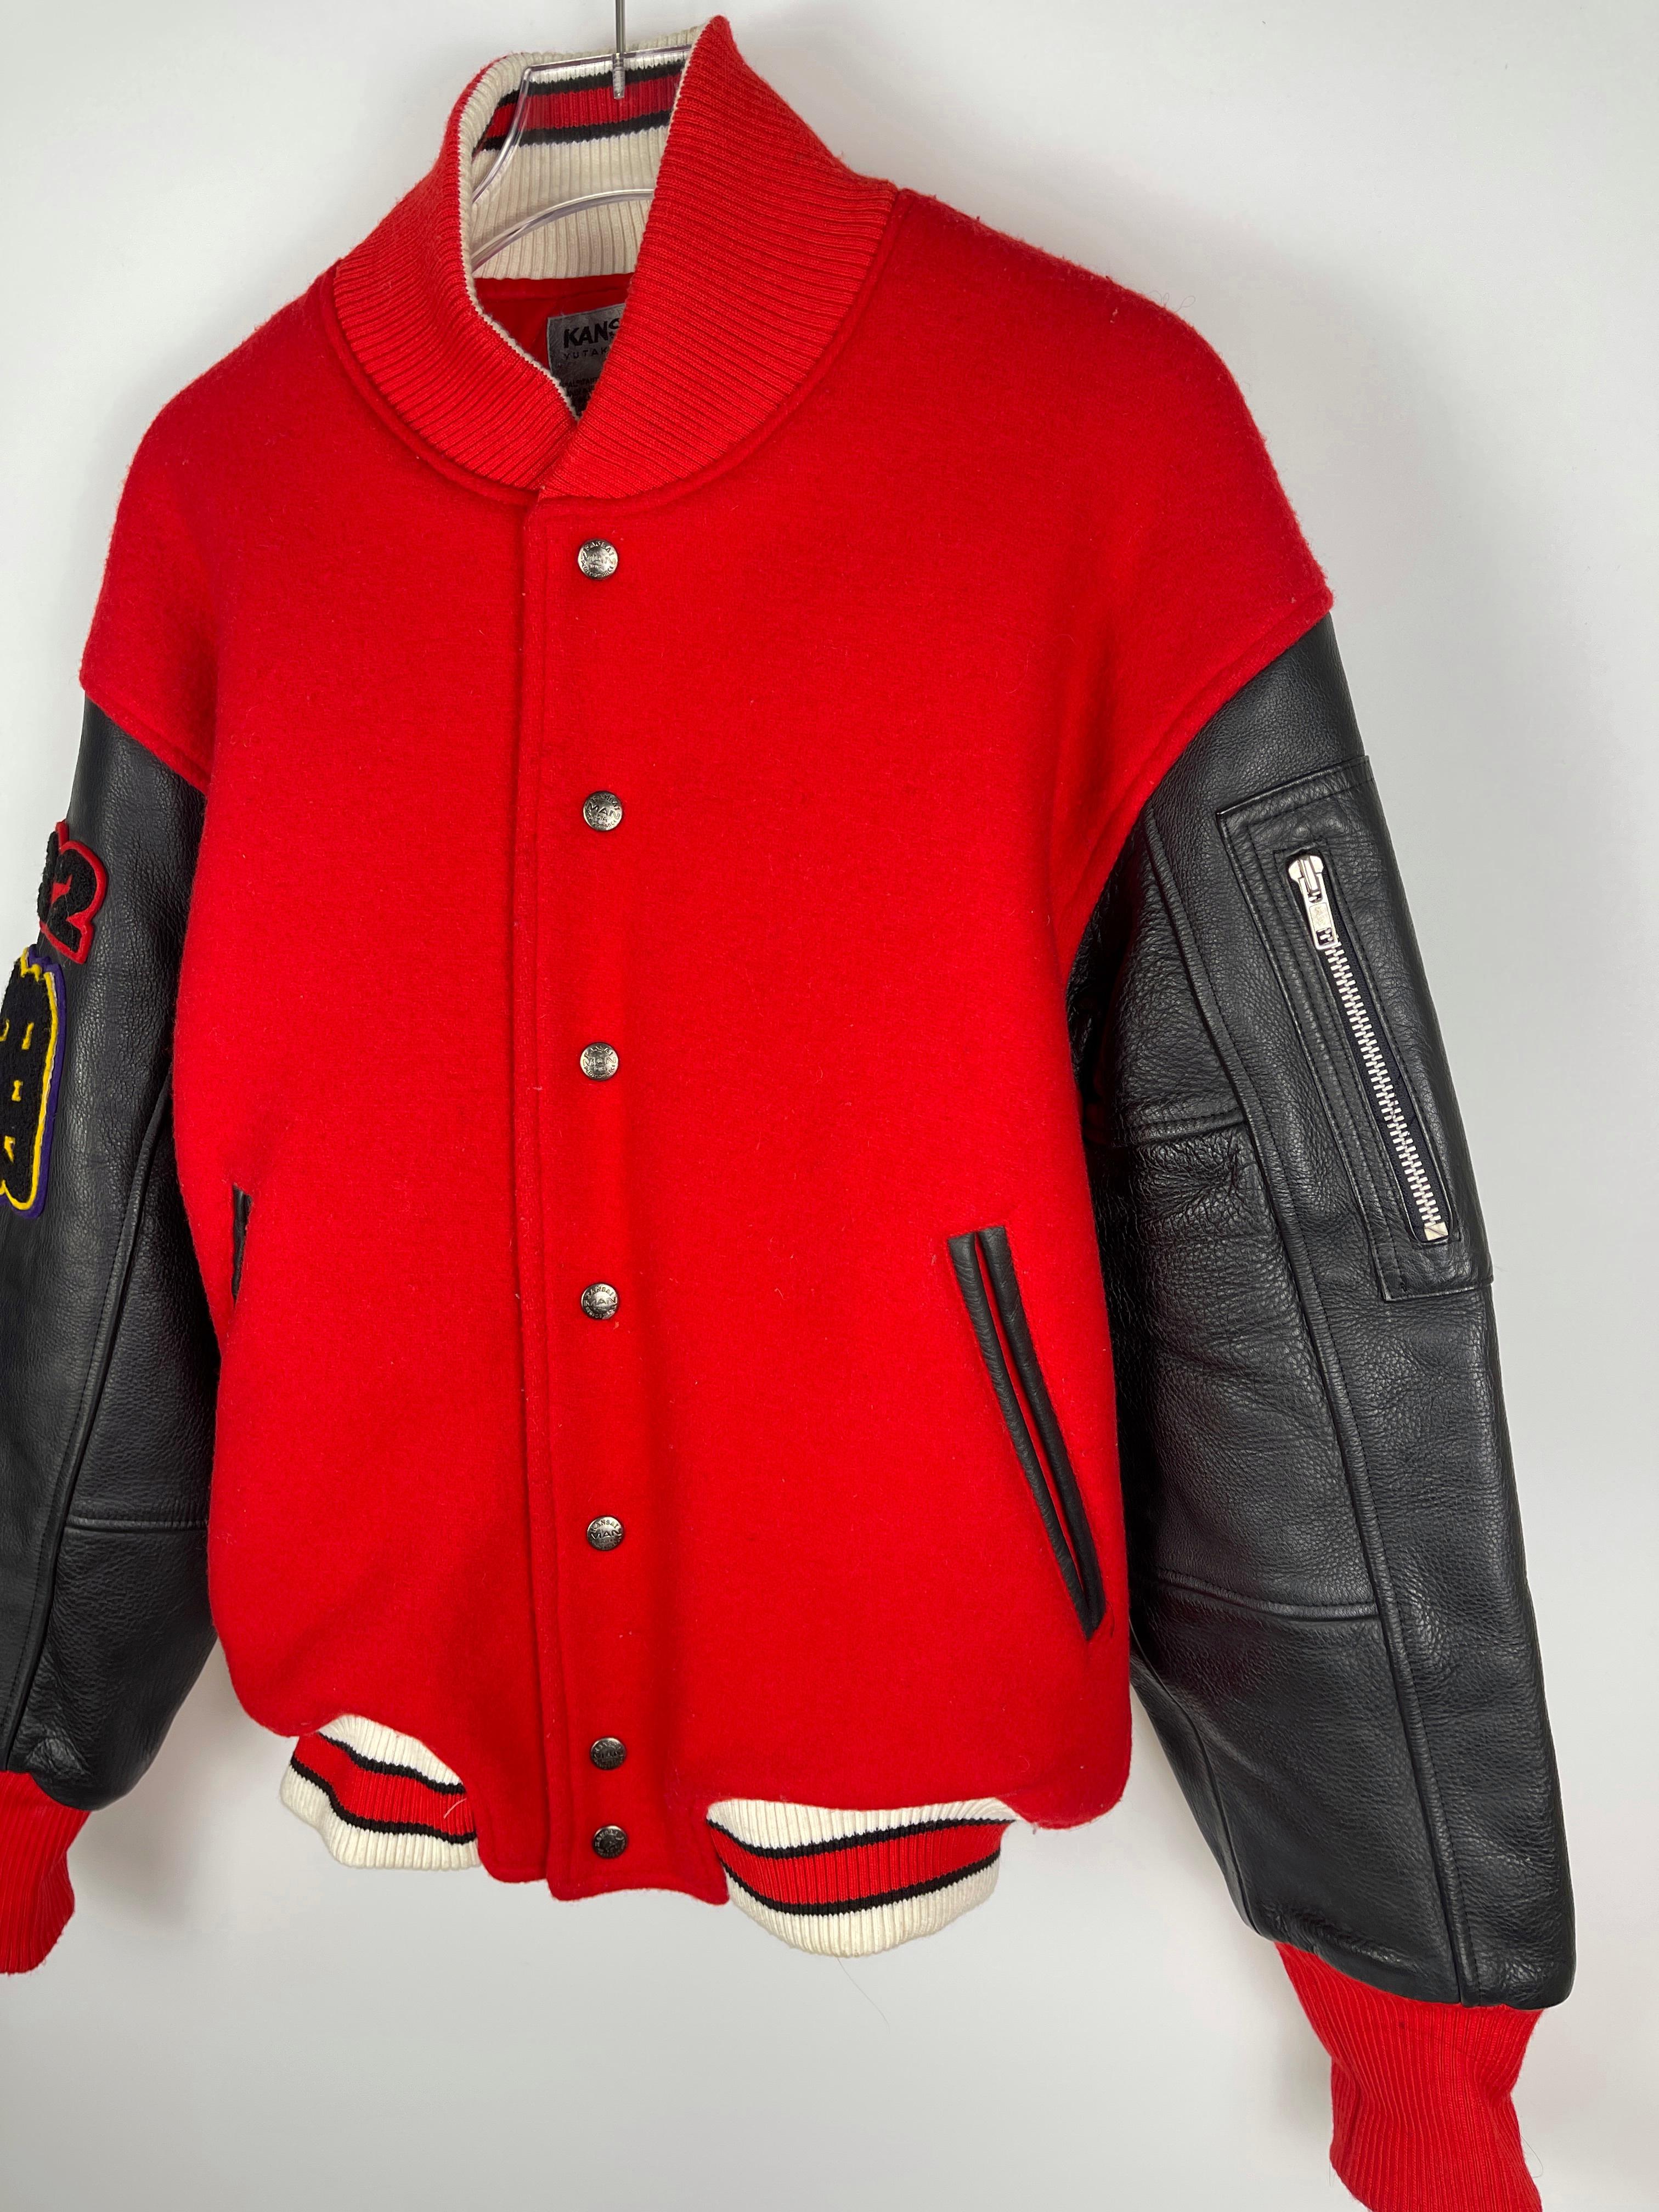 Kansai Yamamoto 1990's Kamikaze Varsity Jacket In Good Condition For Sale In Seattle, WA